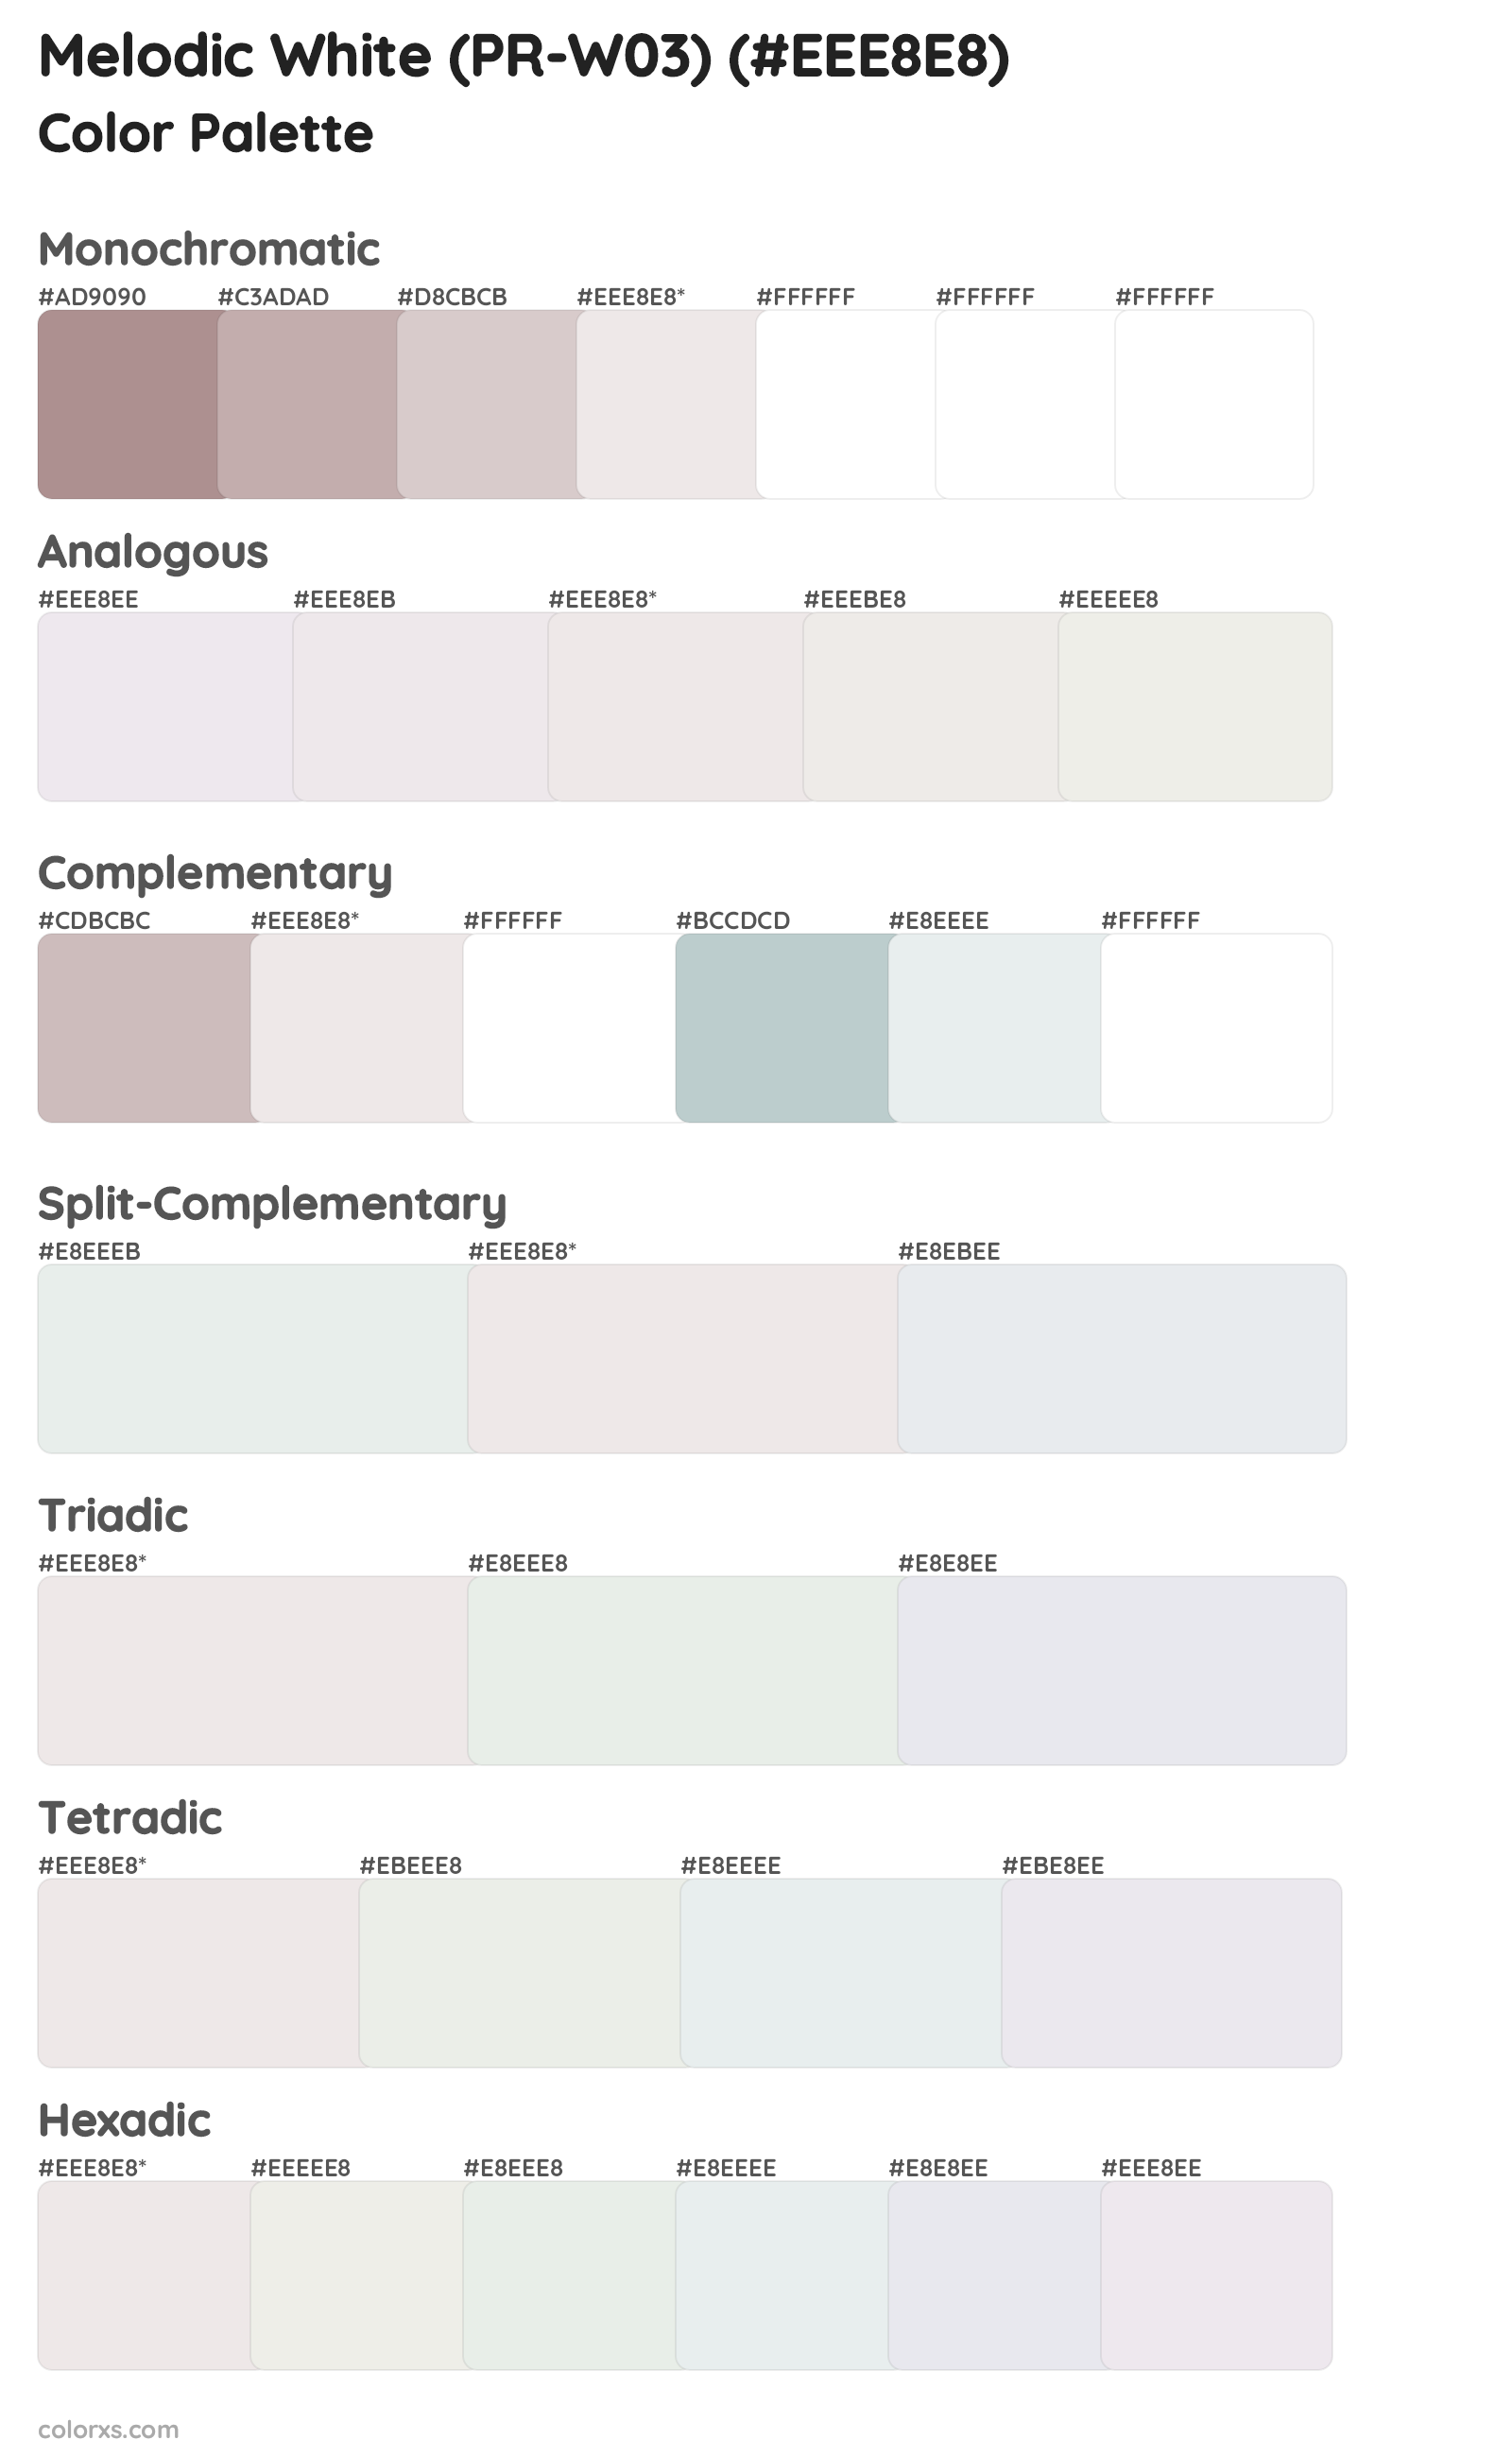 Melodic White (PR-W03) Color Scheme Palettes